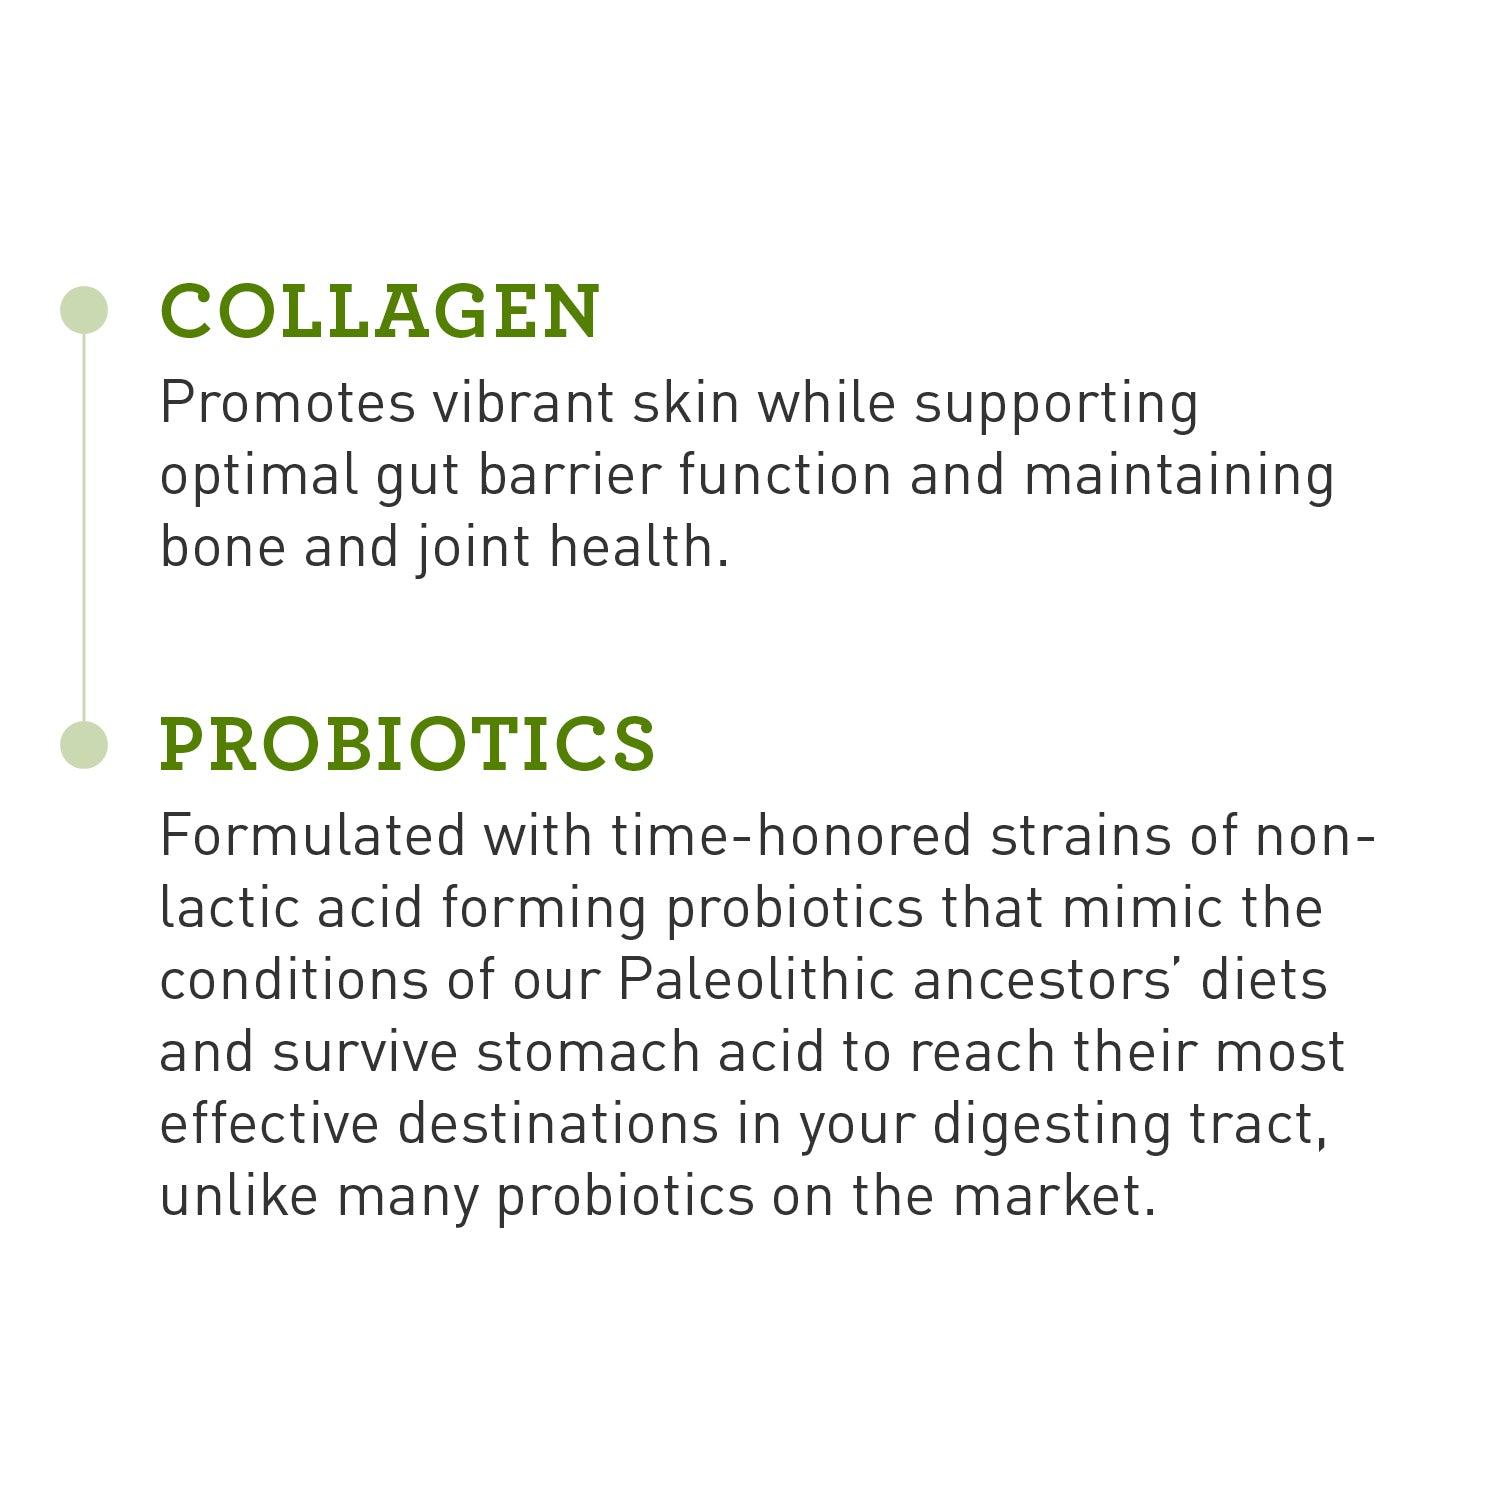 Collagen + SBO Probiotics